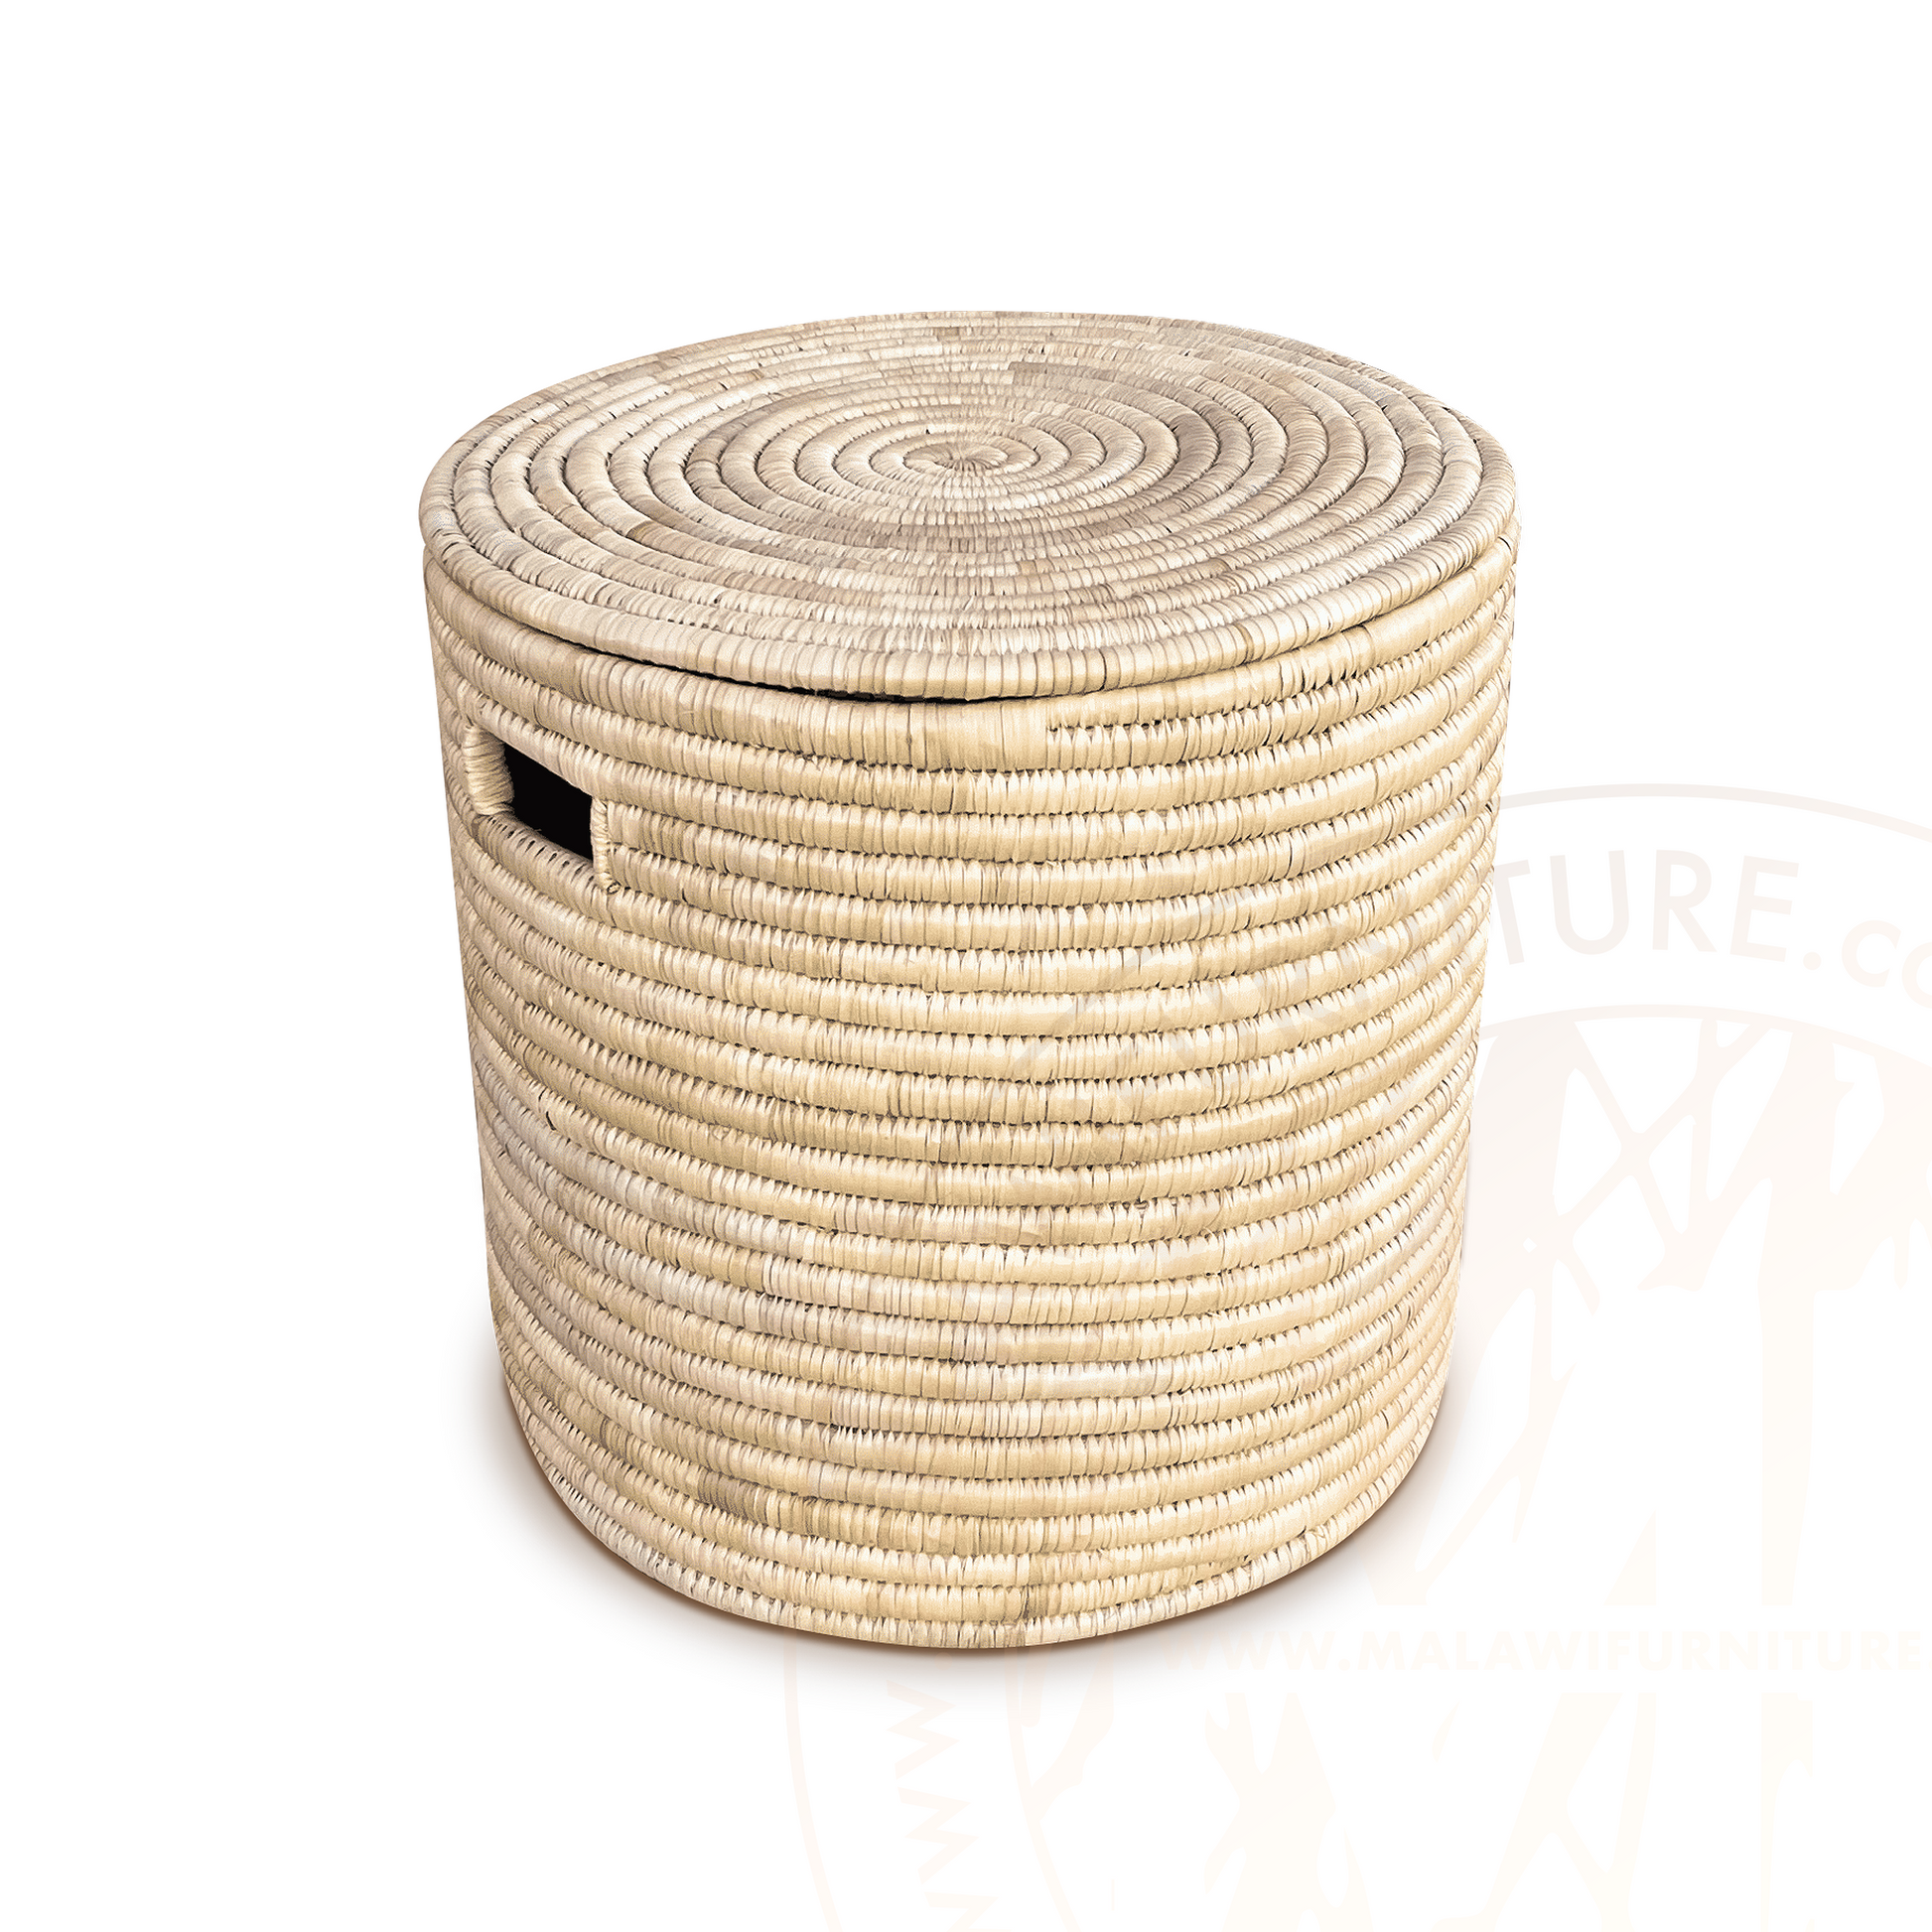 Malawi Laundry Baskets (SET OF 3) Storage Toys Towels Linen Box Weave Woven Basket - Medium